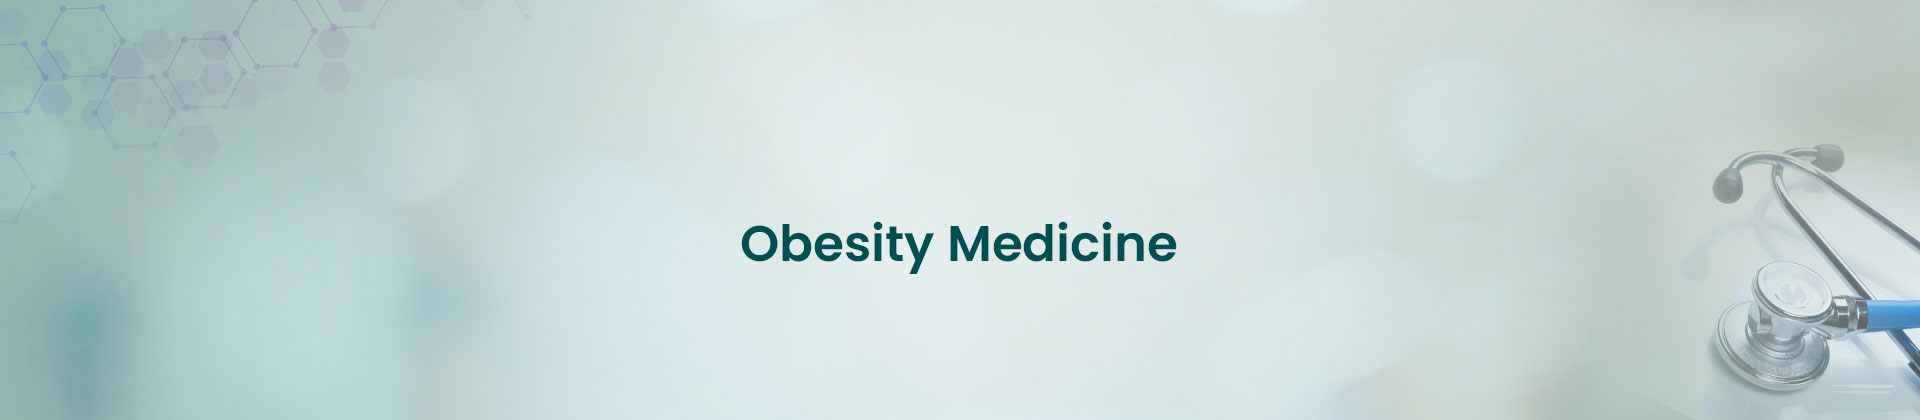 Obesity Medicine